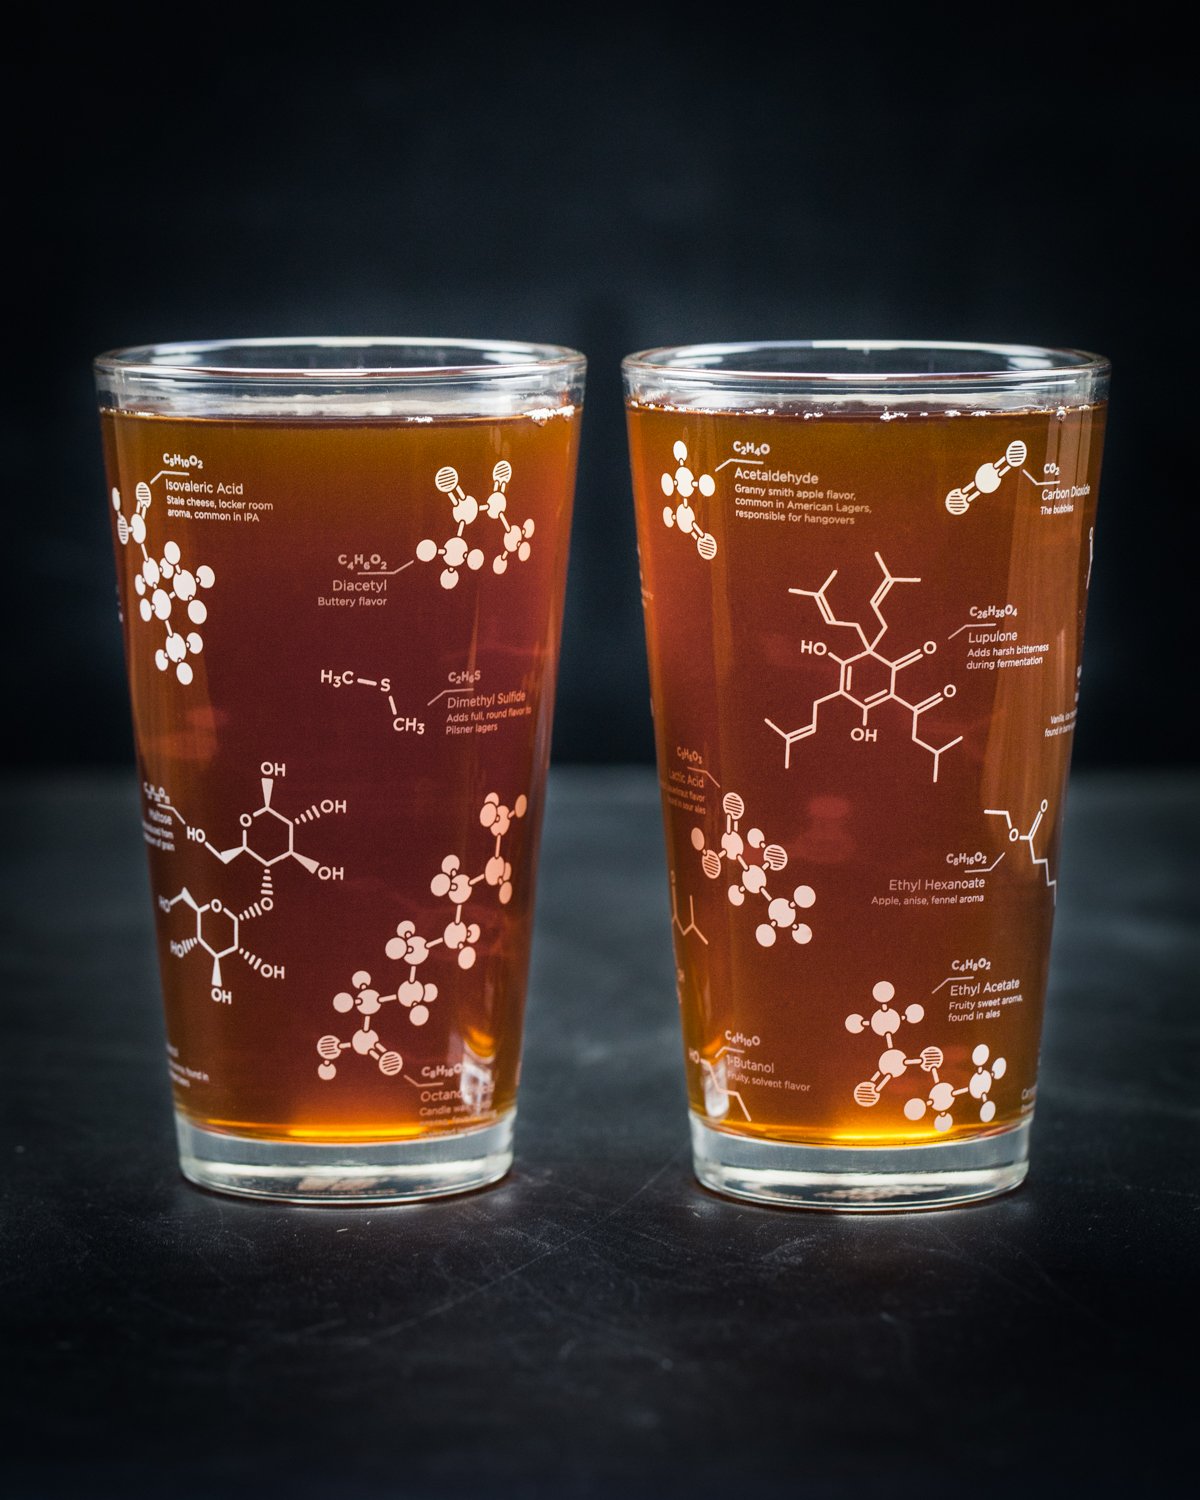 Beer Chemistry Pint 2-Glass Set